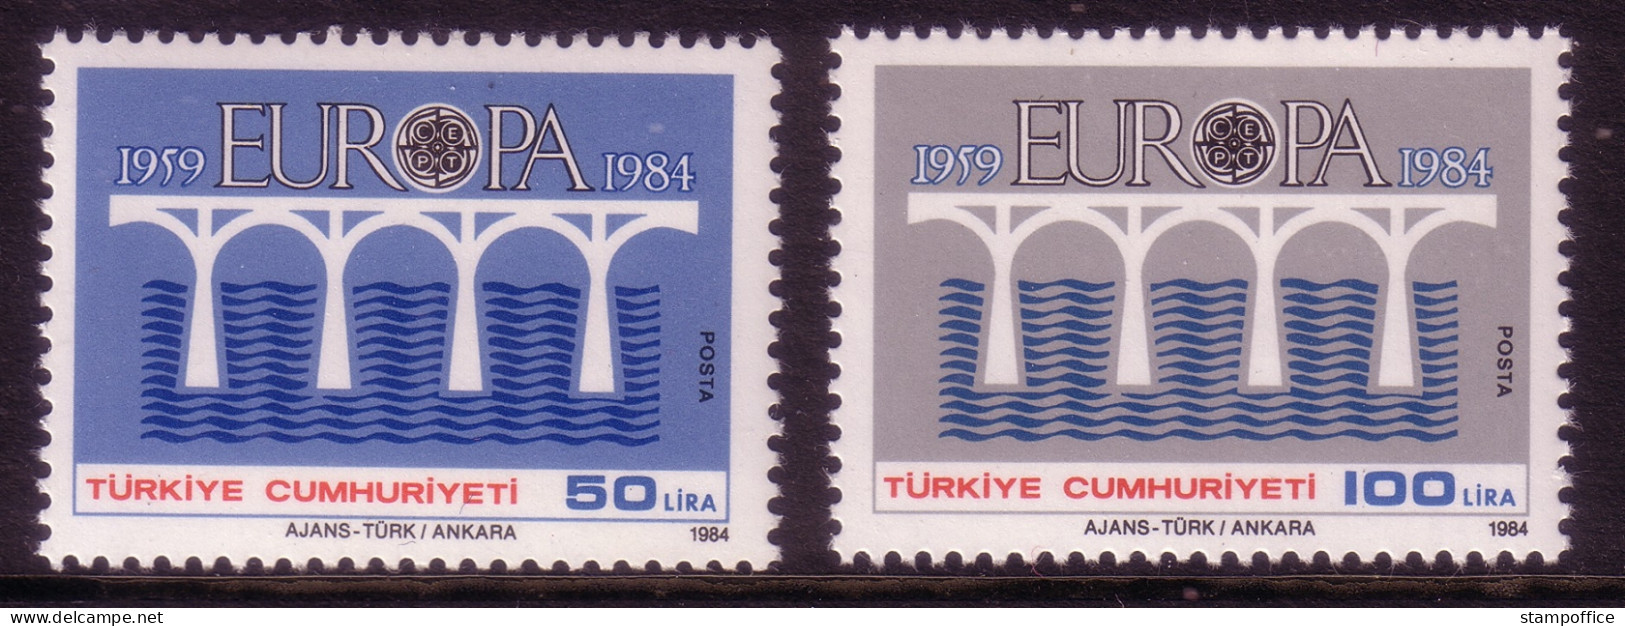 TÜRKEI MI-NR. 2667-2668 POSTFRISCH(MINT) EUROPA 1984 BRÜCKE - 1984